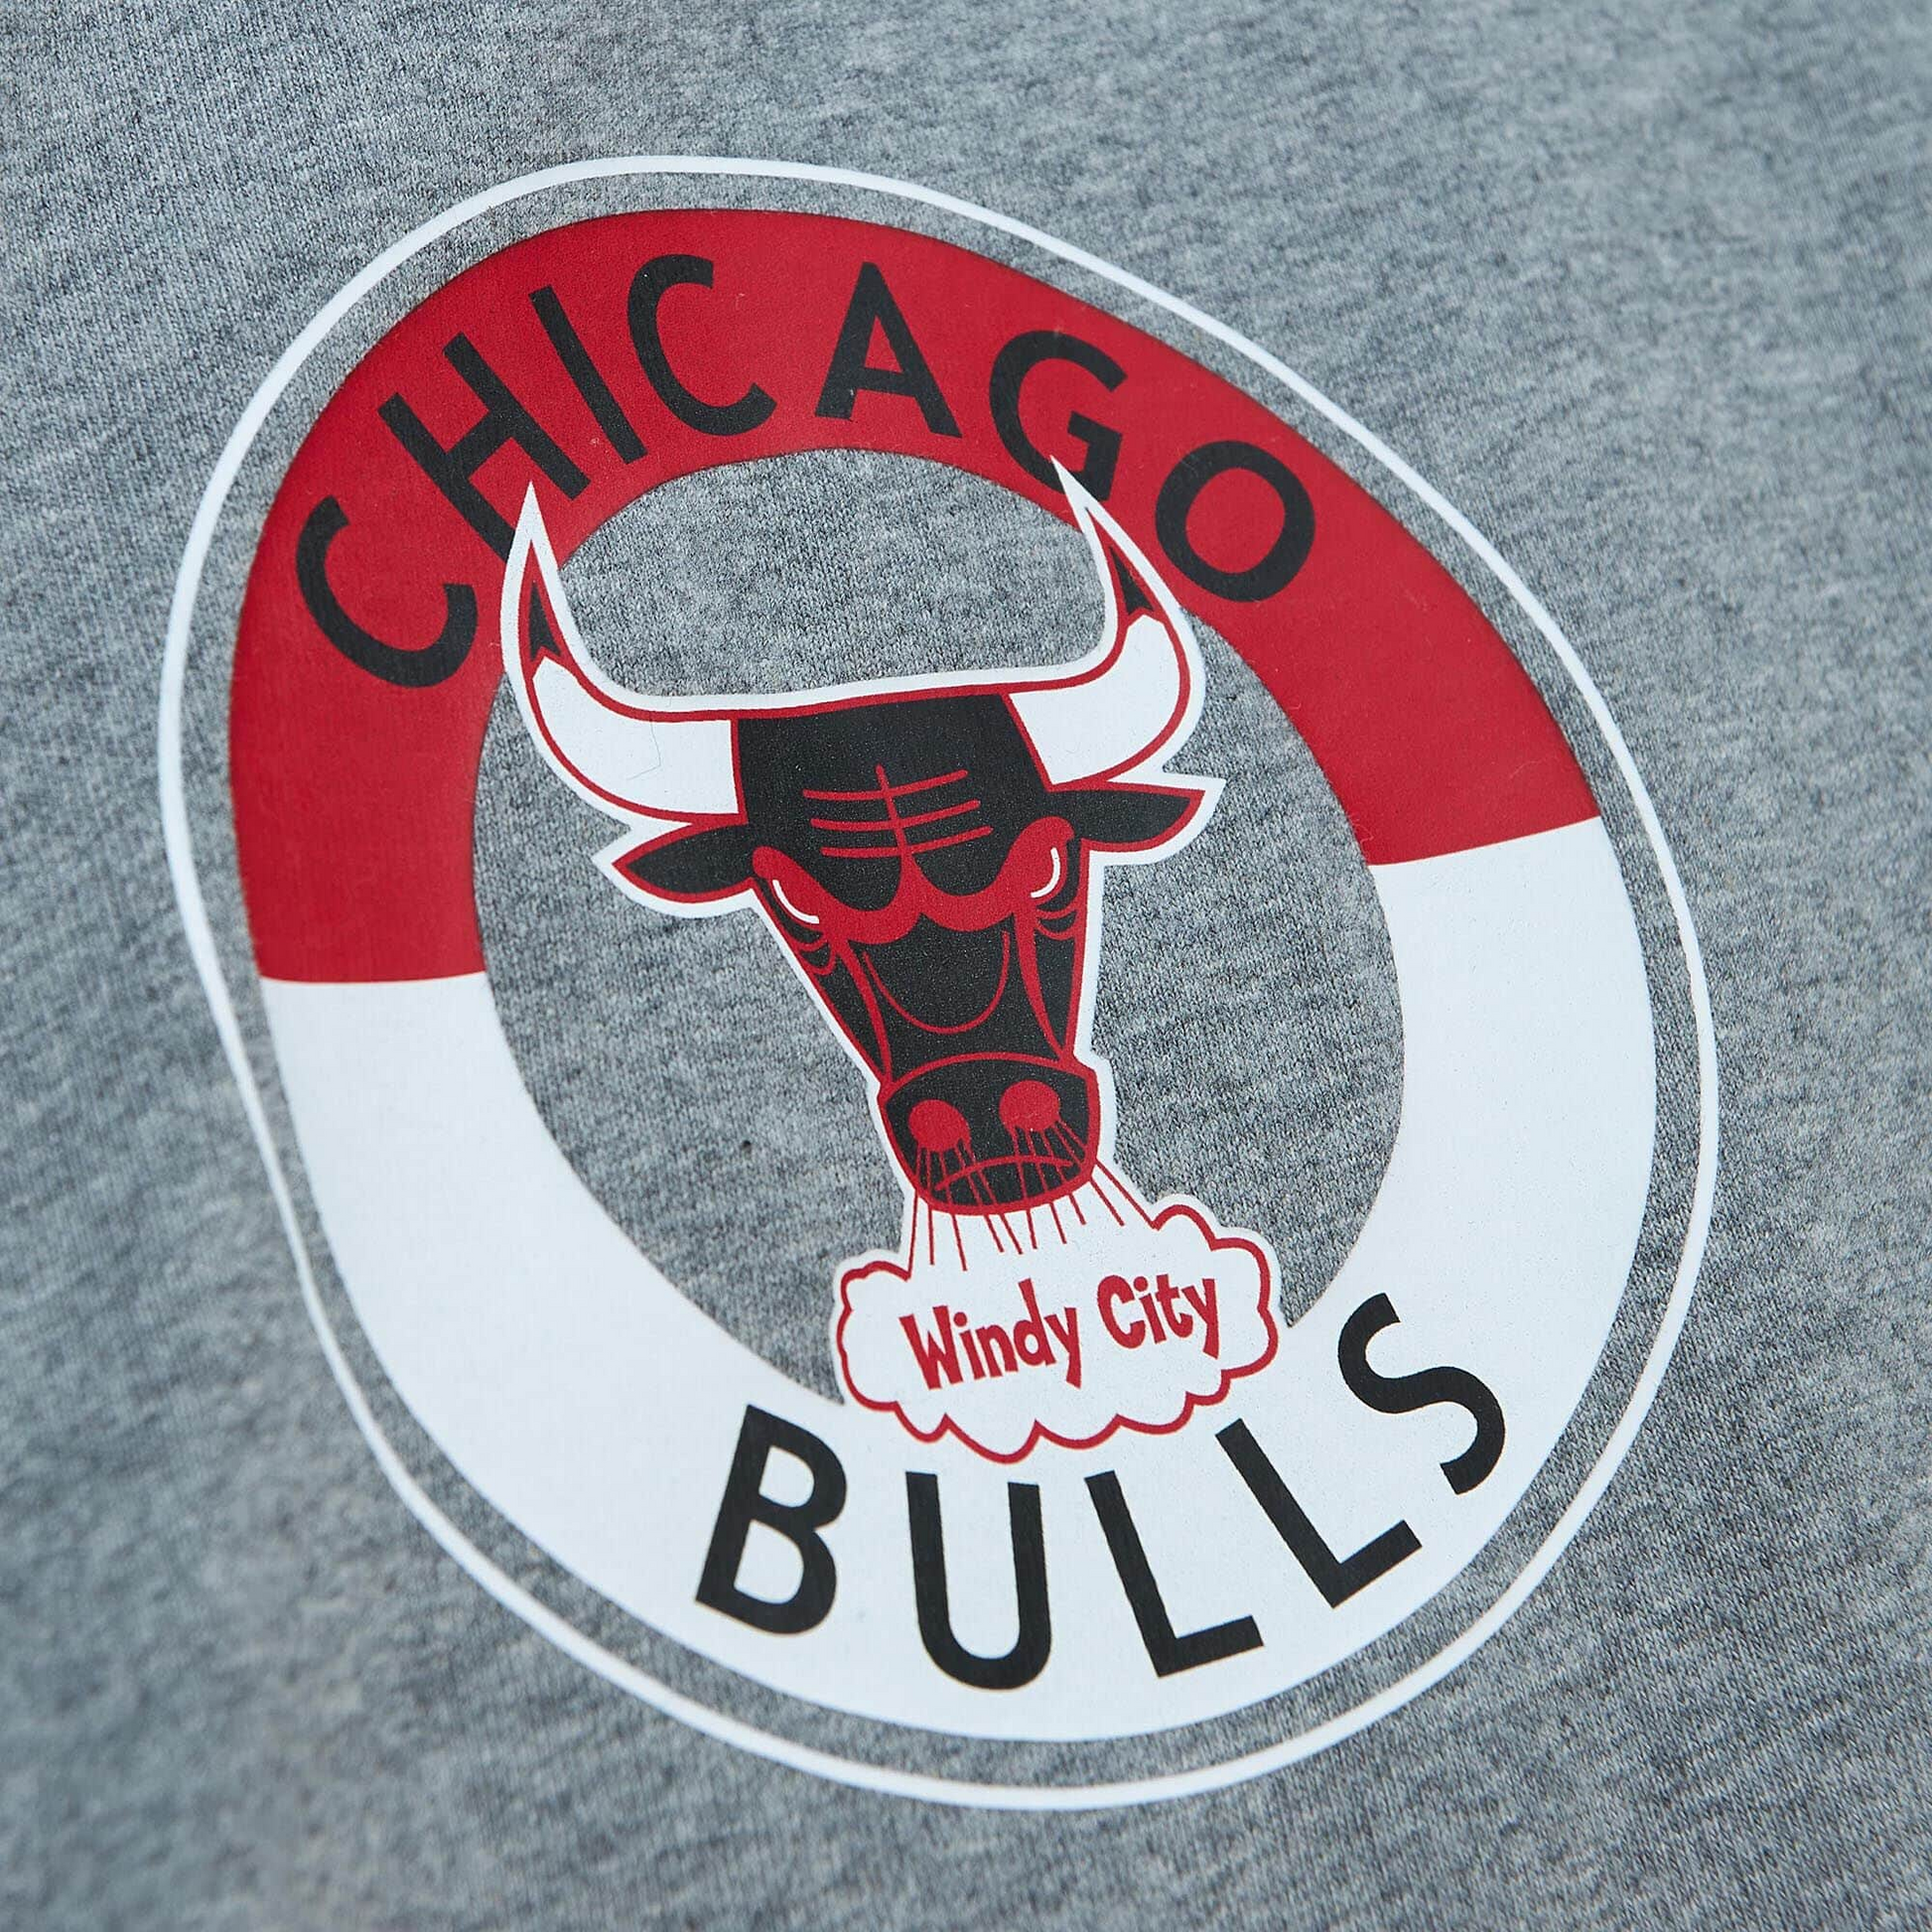 Official Men's Chicago Bulls Gear, Mens Bulls Apparel, Guys